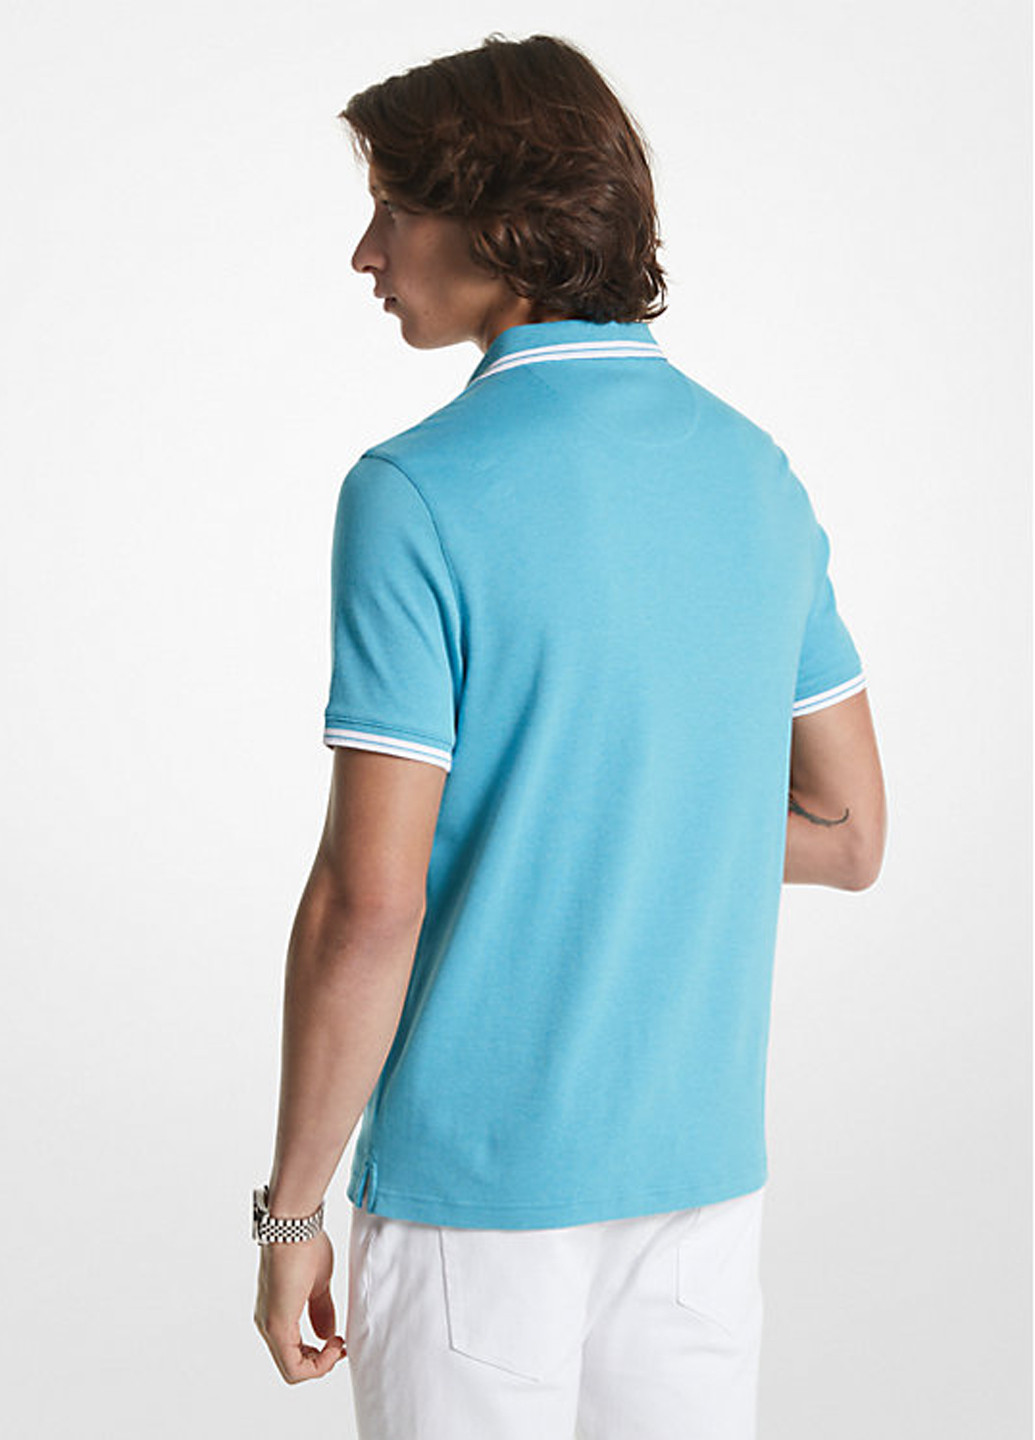 Голубой футболка-поло для мужчин Michael Kors однотонная